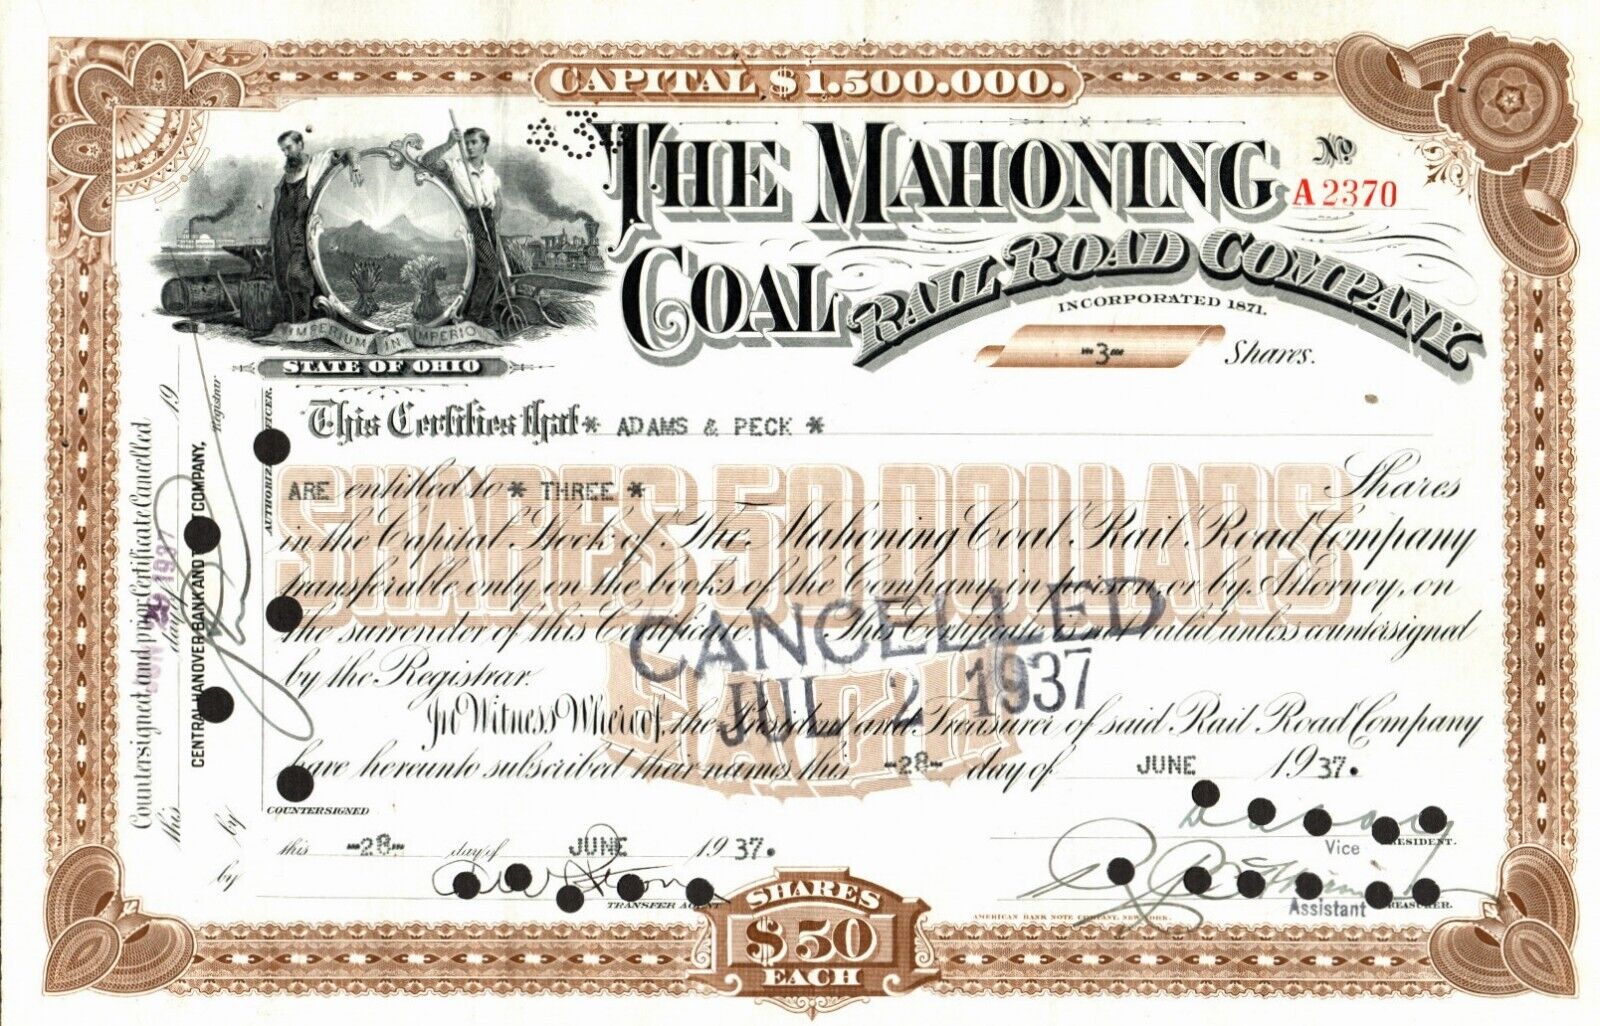 The Mahoning Coal Railroad Co - Original Stock Certificate - 1937 - A2370